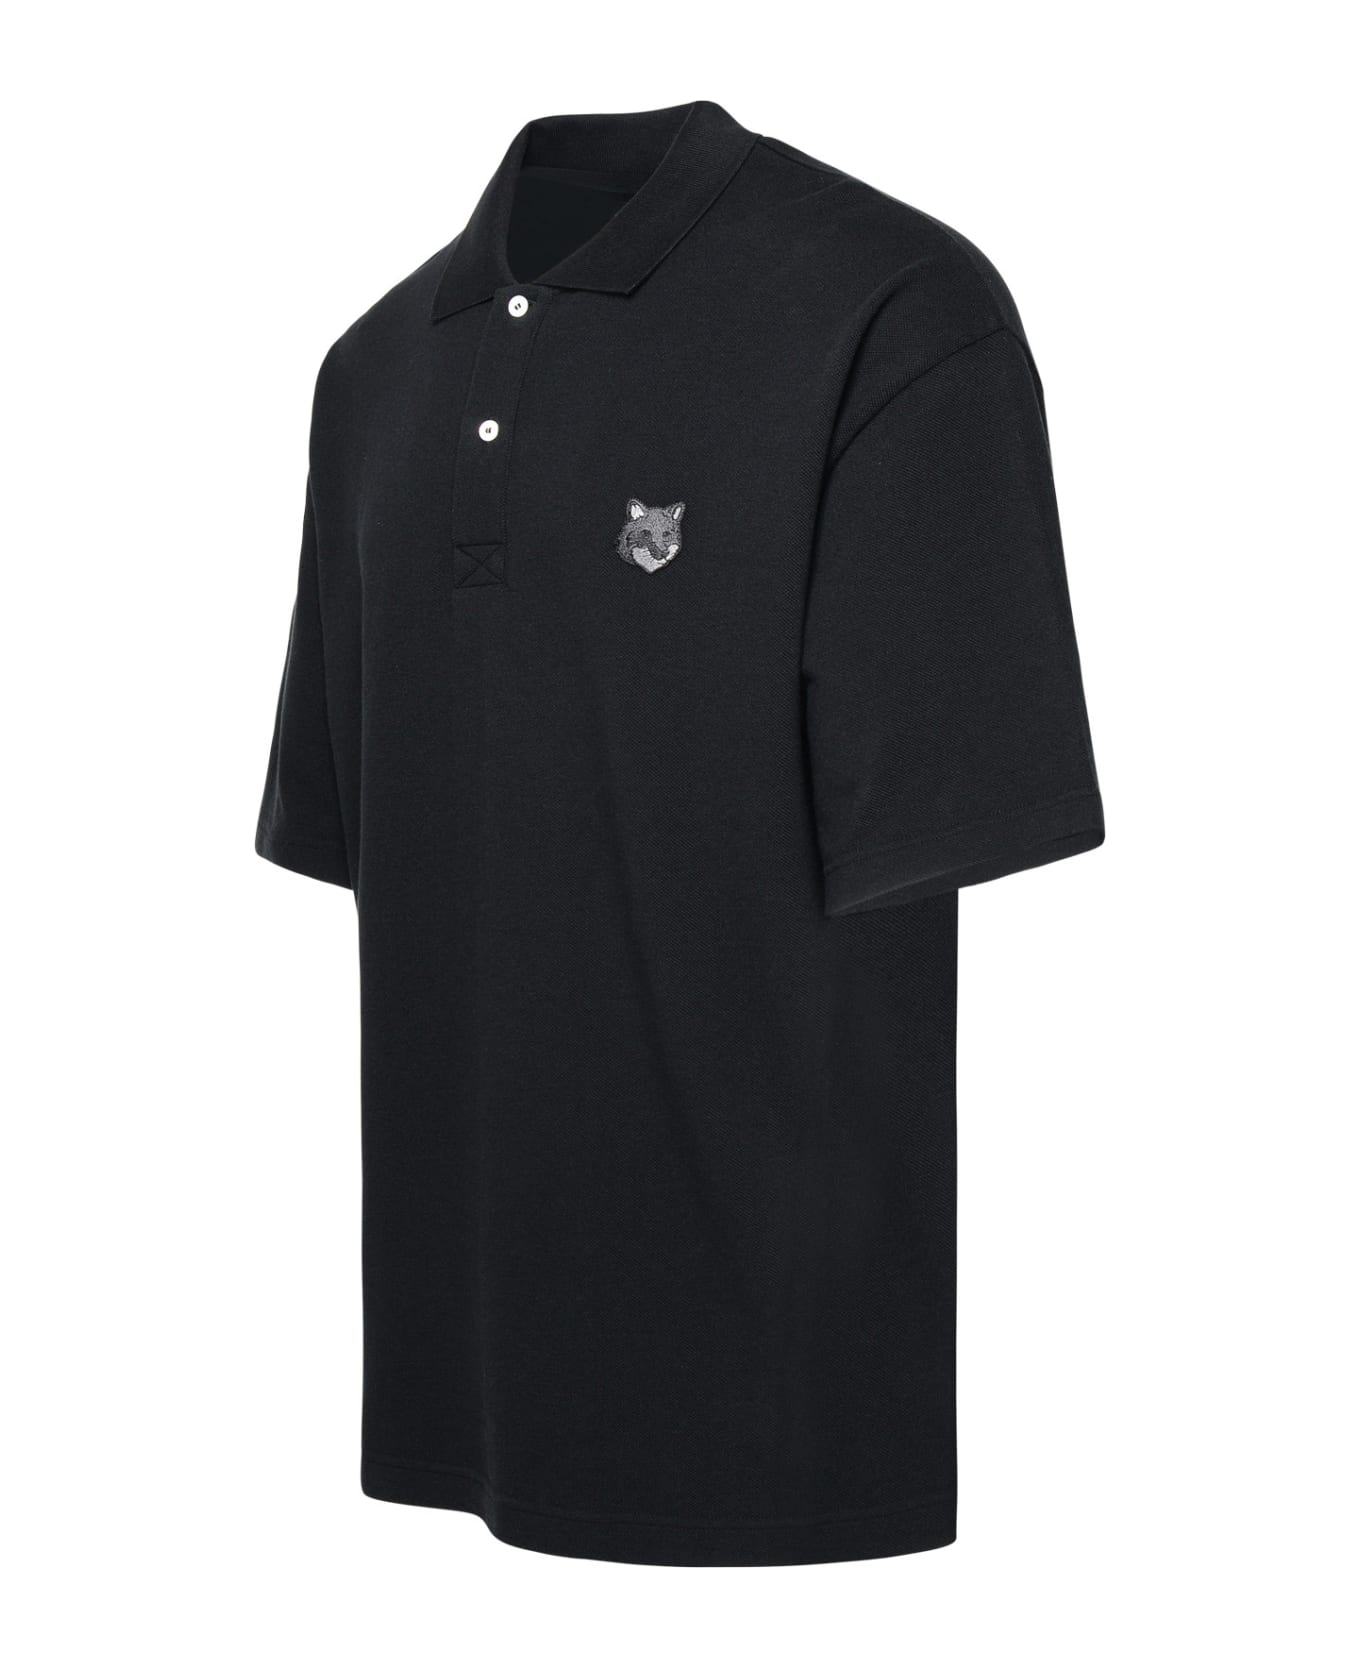 Maison Kitsuné Black Cotton Polo Shirt - Black ポロシャツ